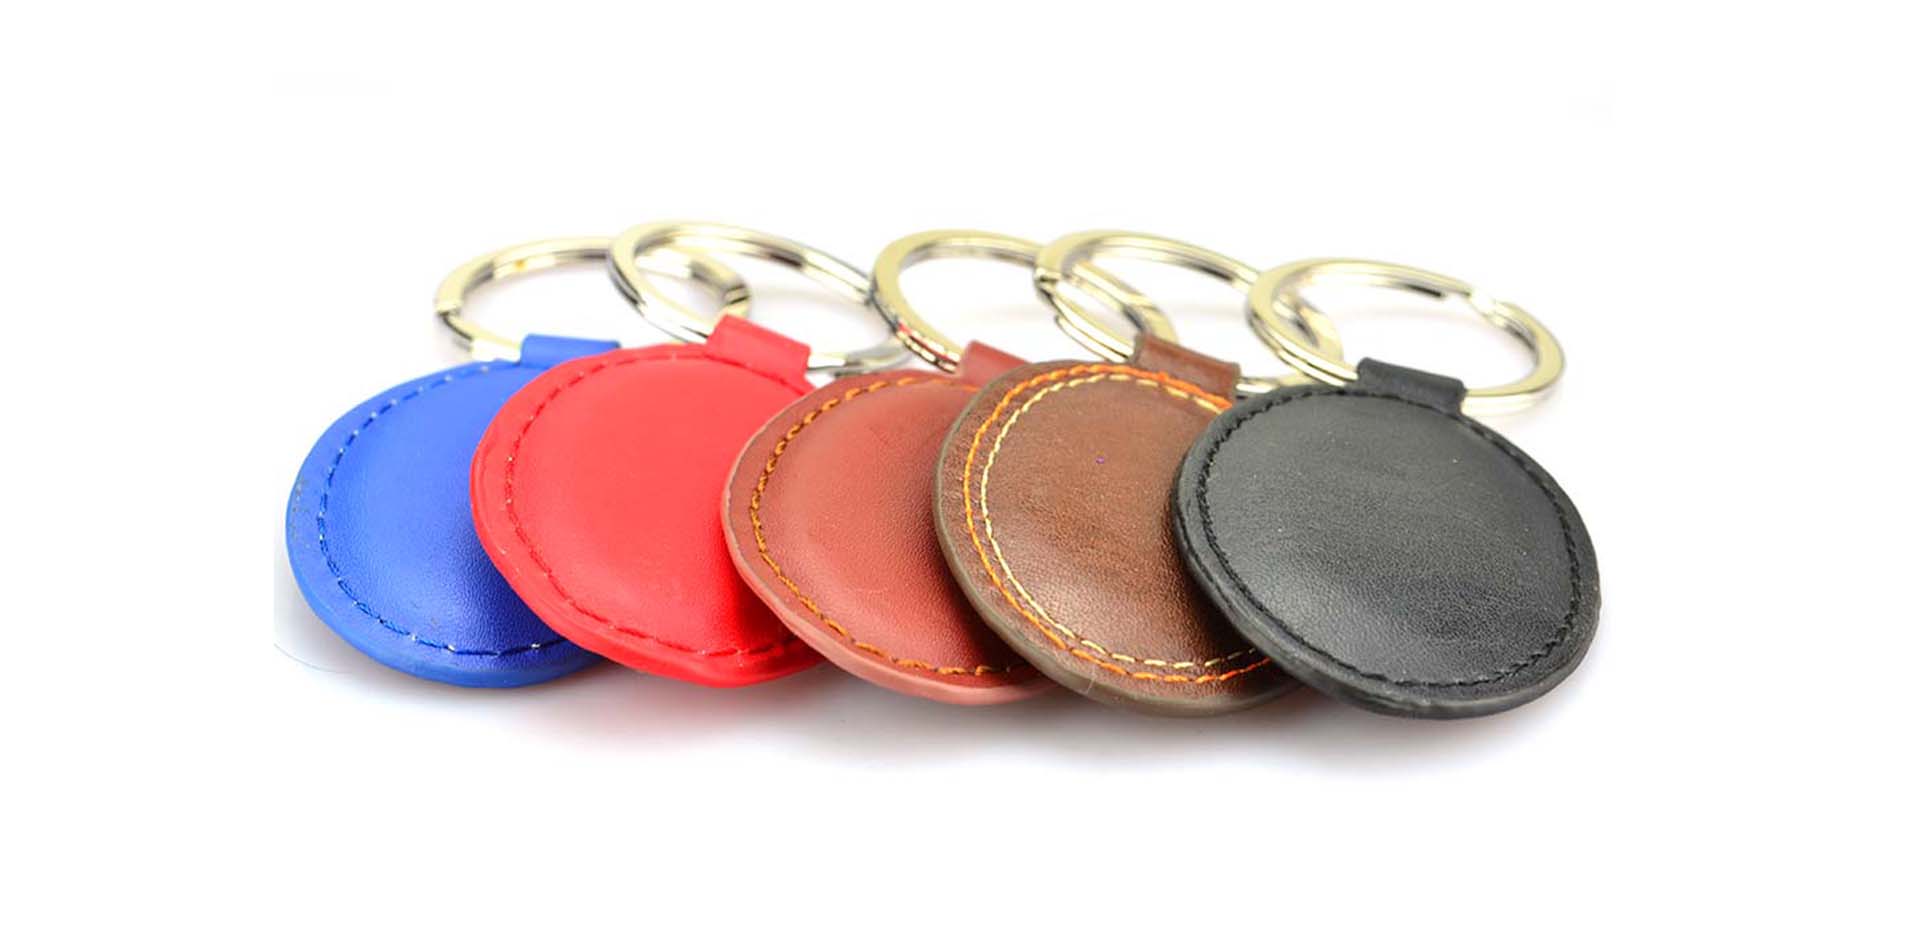 Custom Leather Keychains